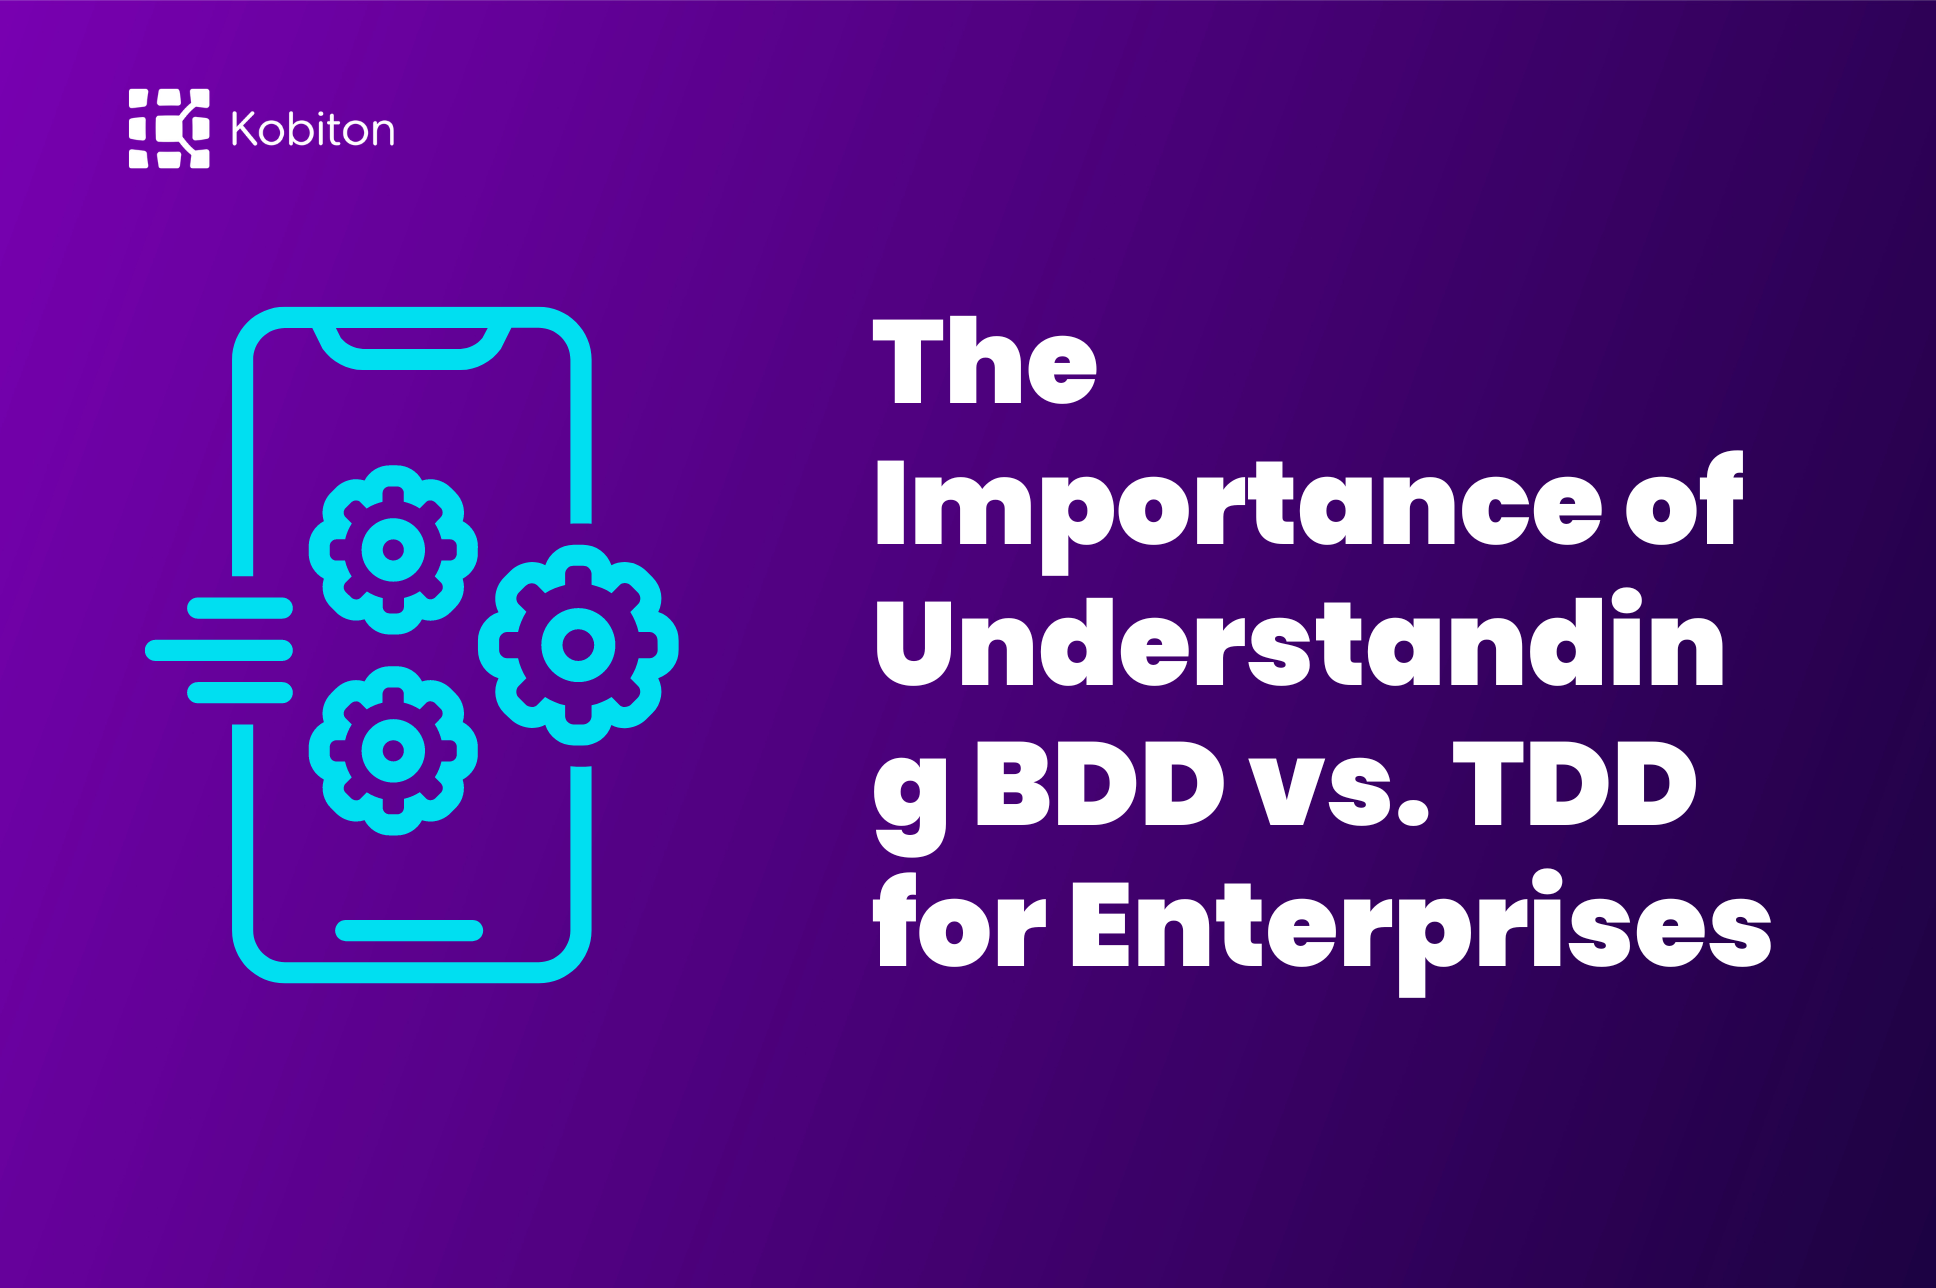 The Importance of Understanding BDD vs. TDD for Enterprises